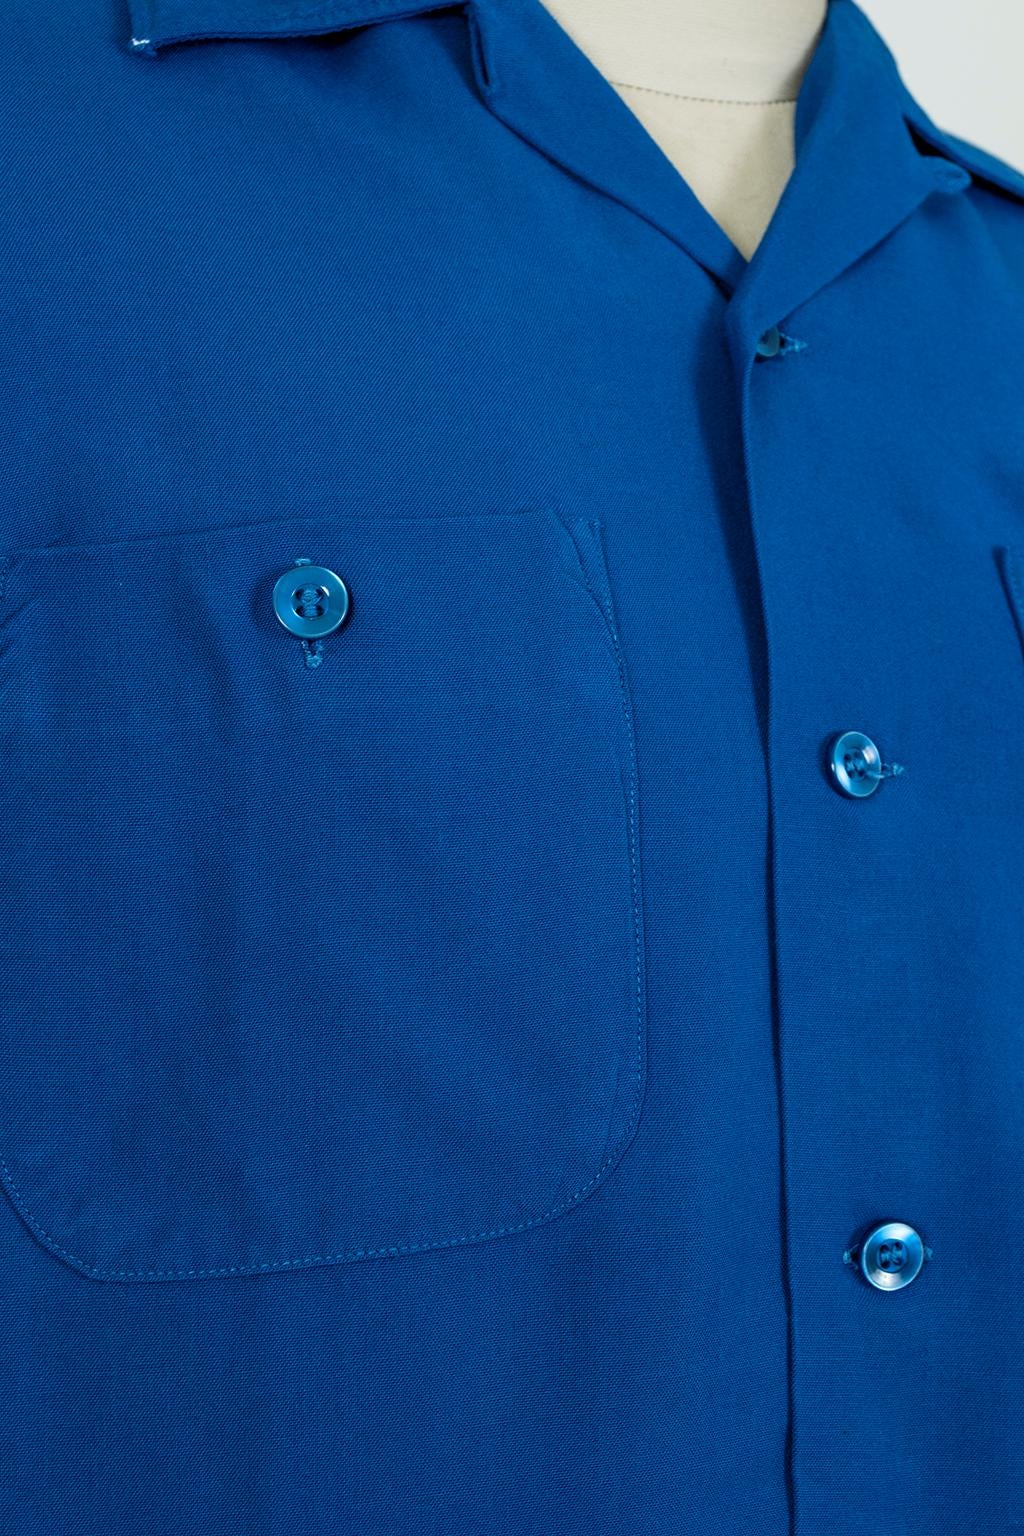 Men’s King Louie Ten Strike Royal Blue Bowling Shirt – Medium, 1950s In Good Condition For Sale In Tucson, AZ